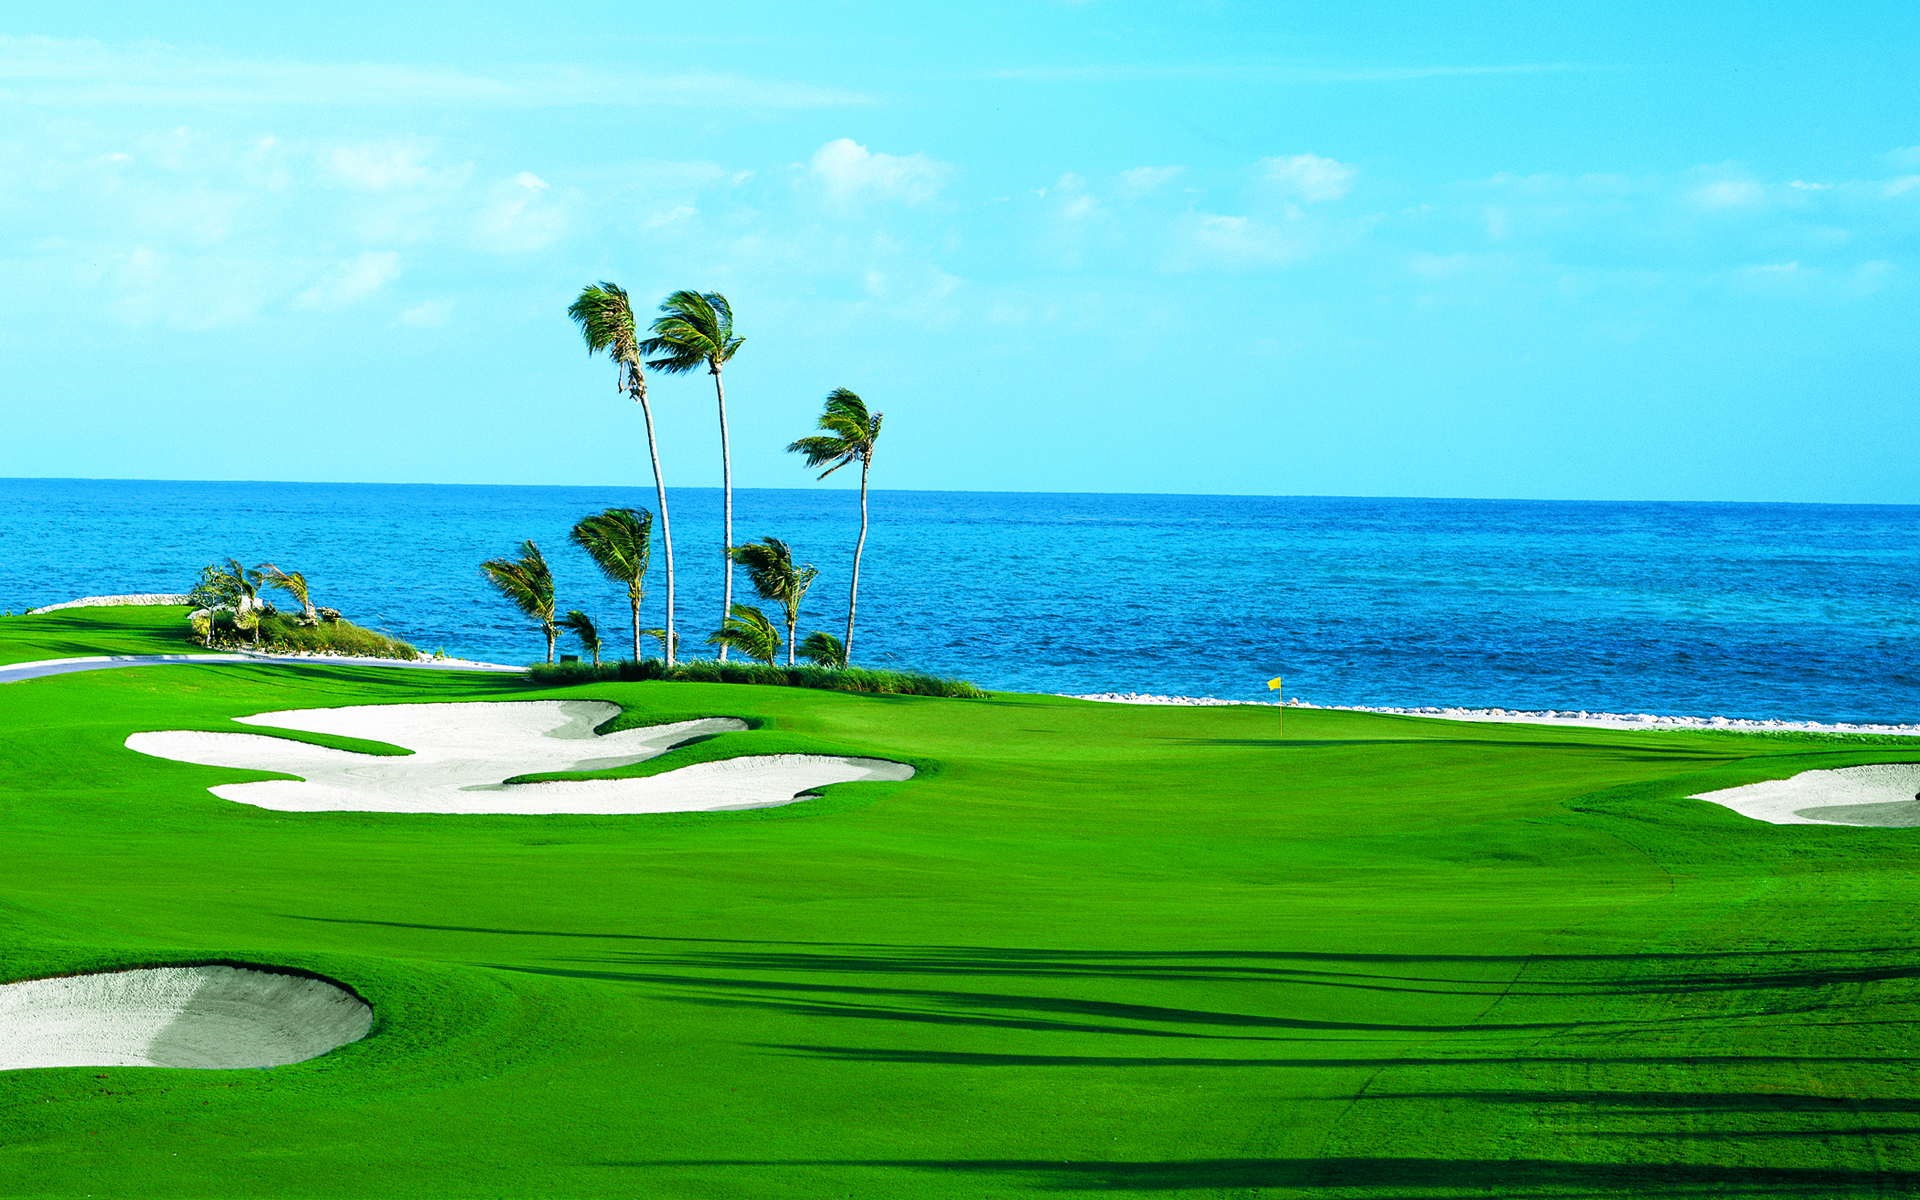 Desktop Backgrounds Golf Courses wallpaper